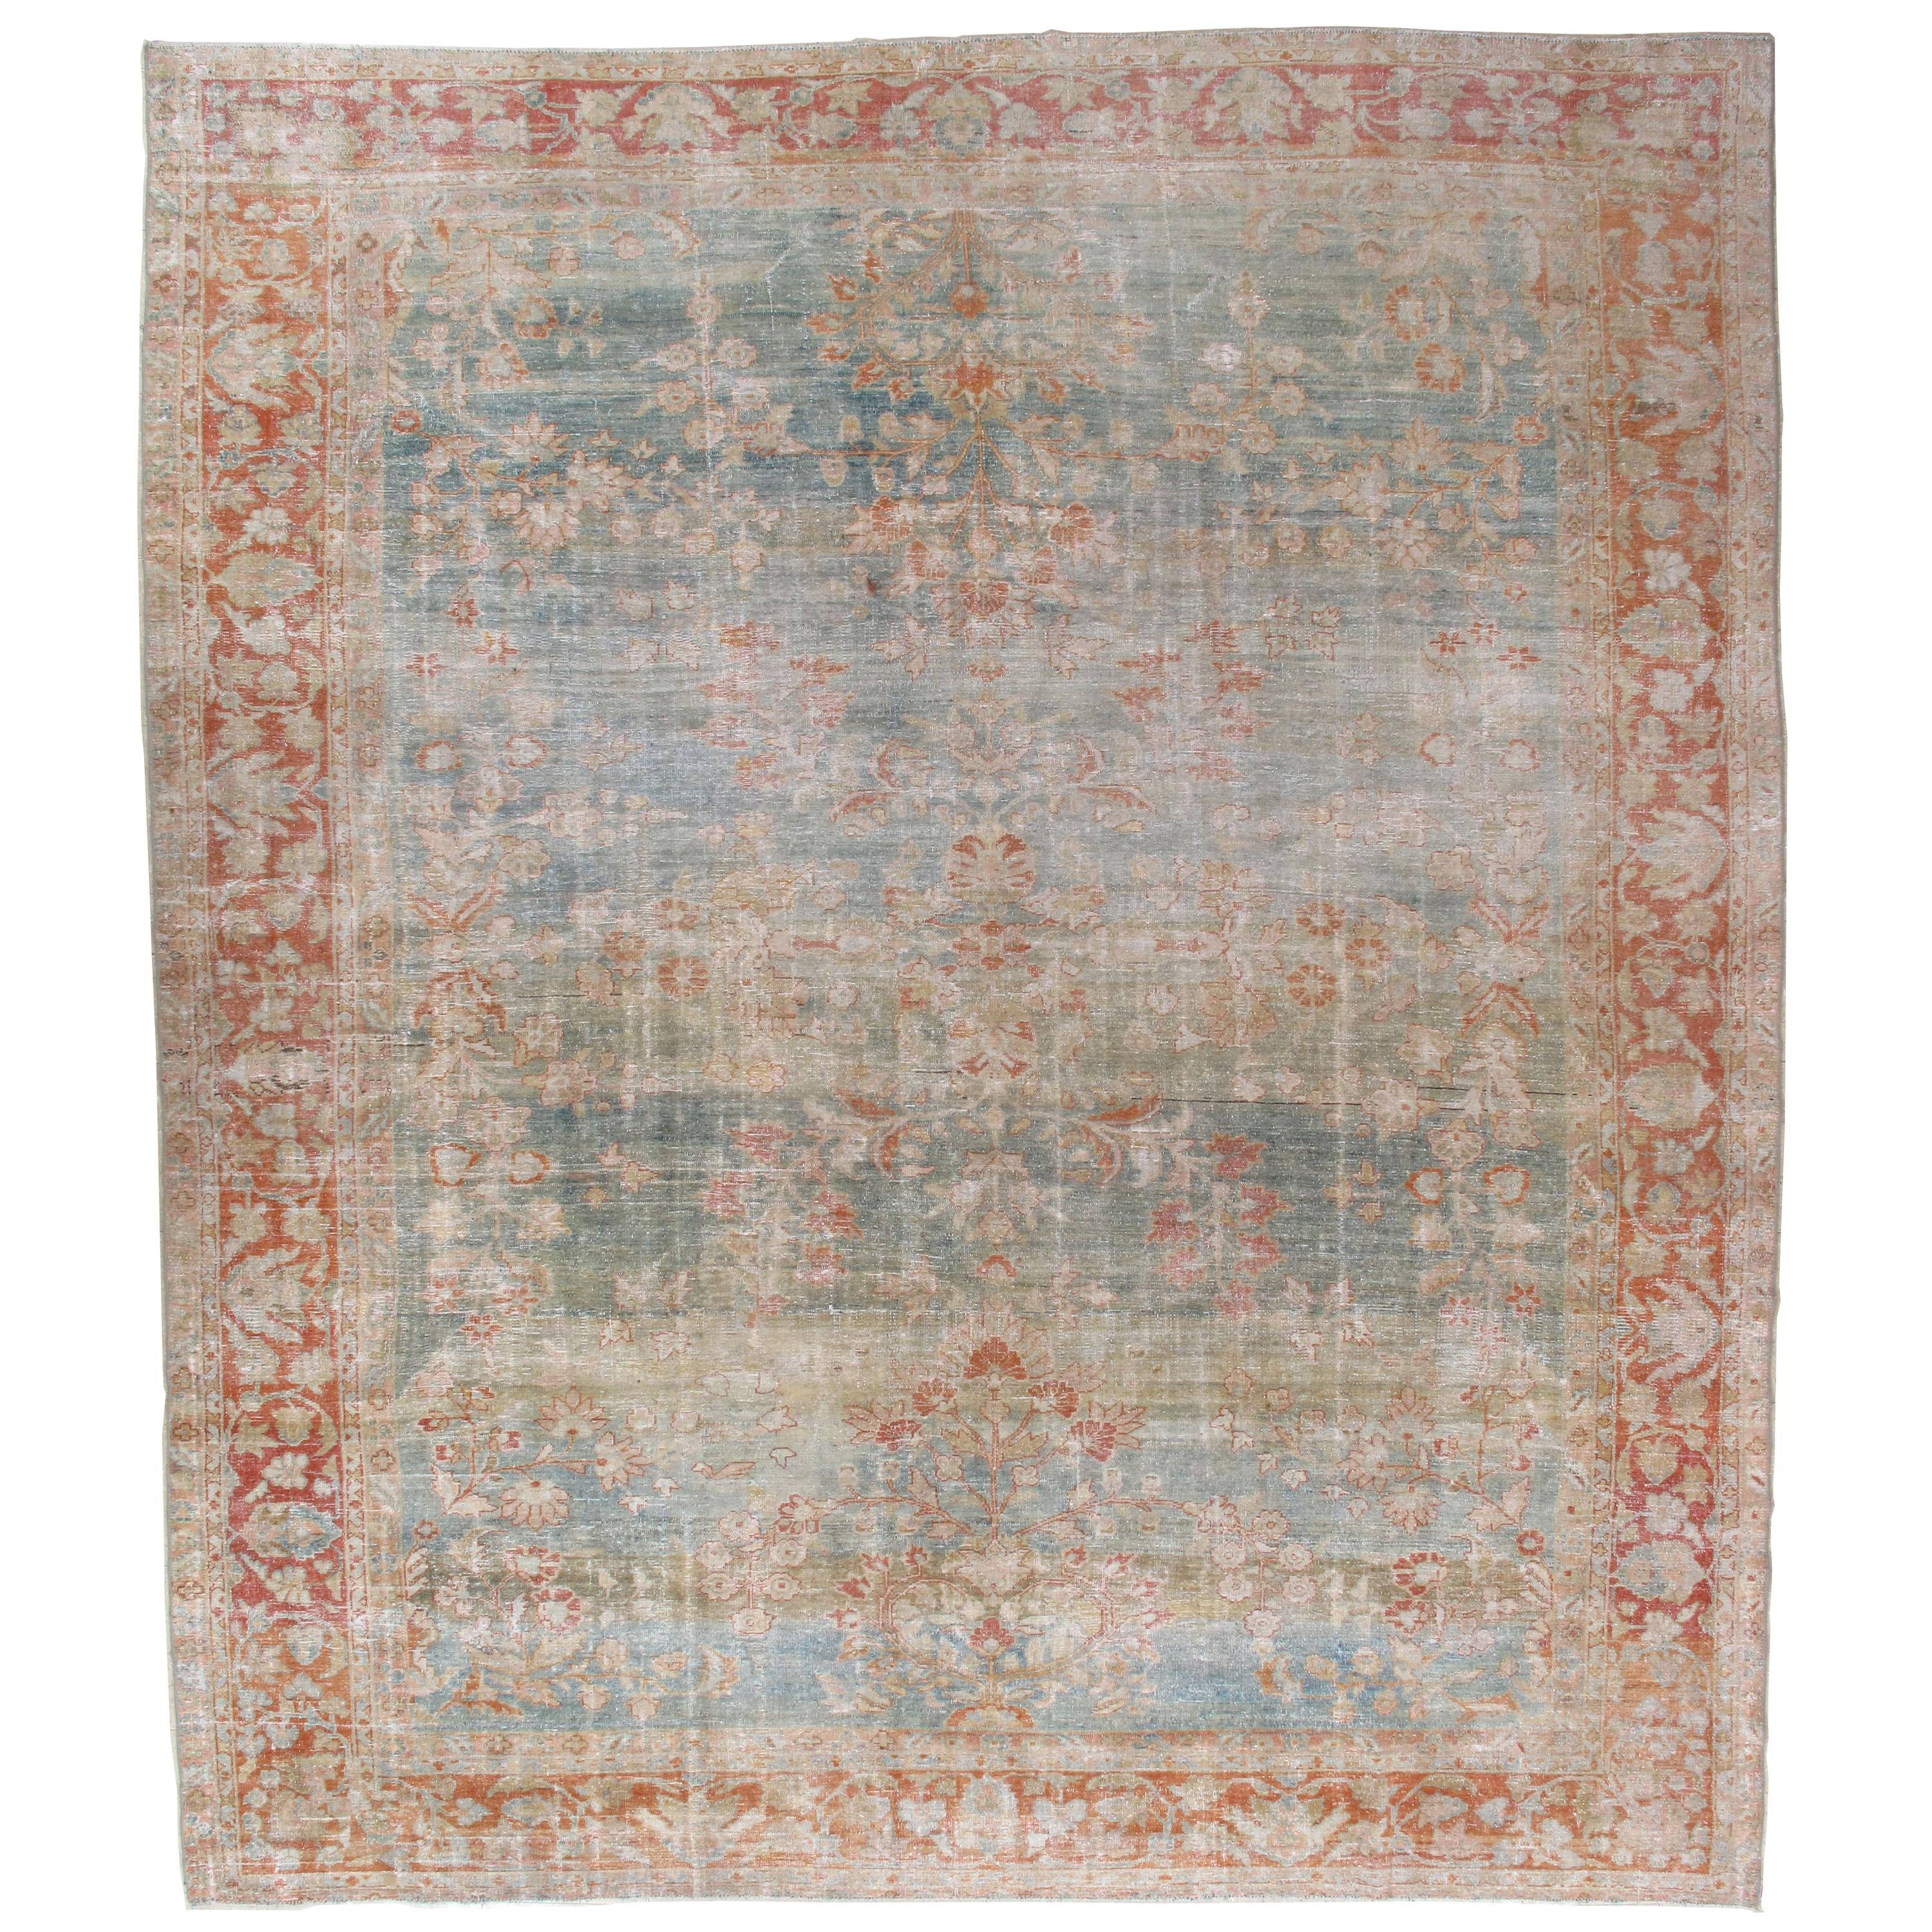 Antique Sultanabad Carpet, Handmade Oriental Rug, Soft, Pale Blue, Orange